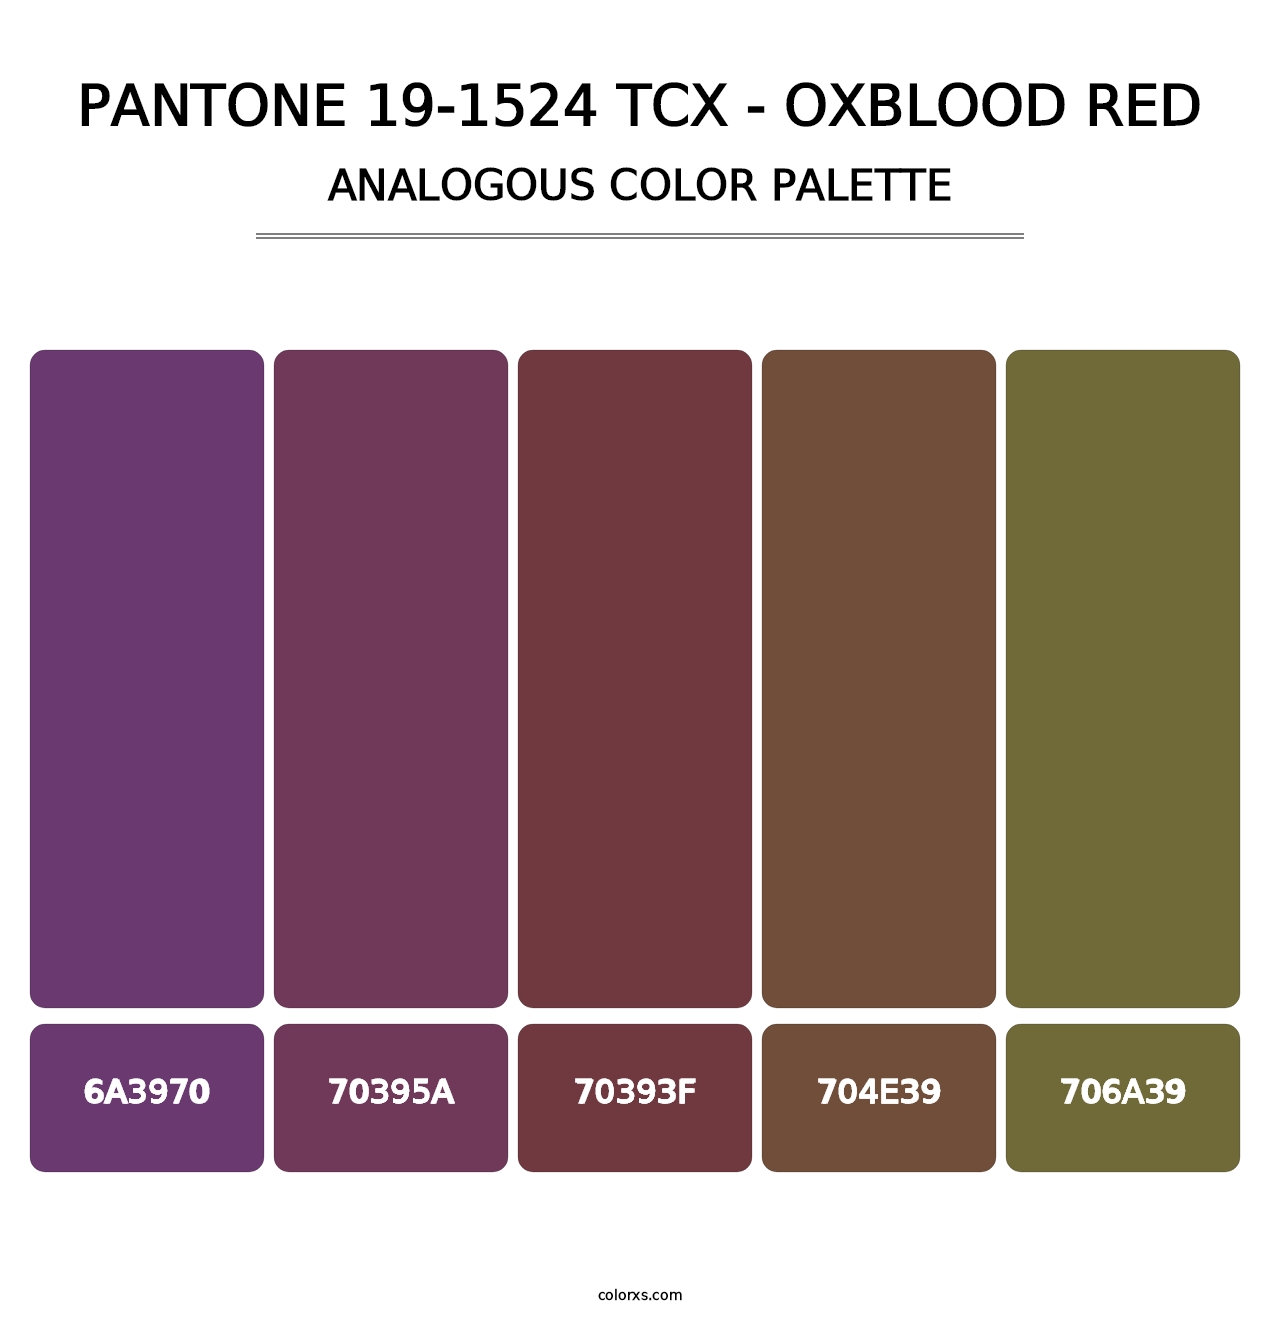 PANTONE 19-1524 TCX - Oxblood Red - Analogous Color Palette